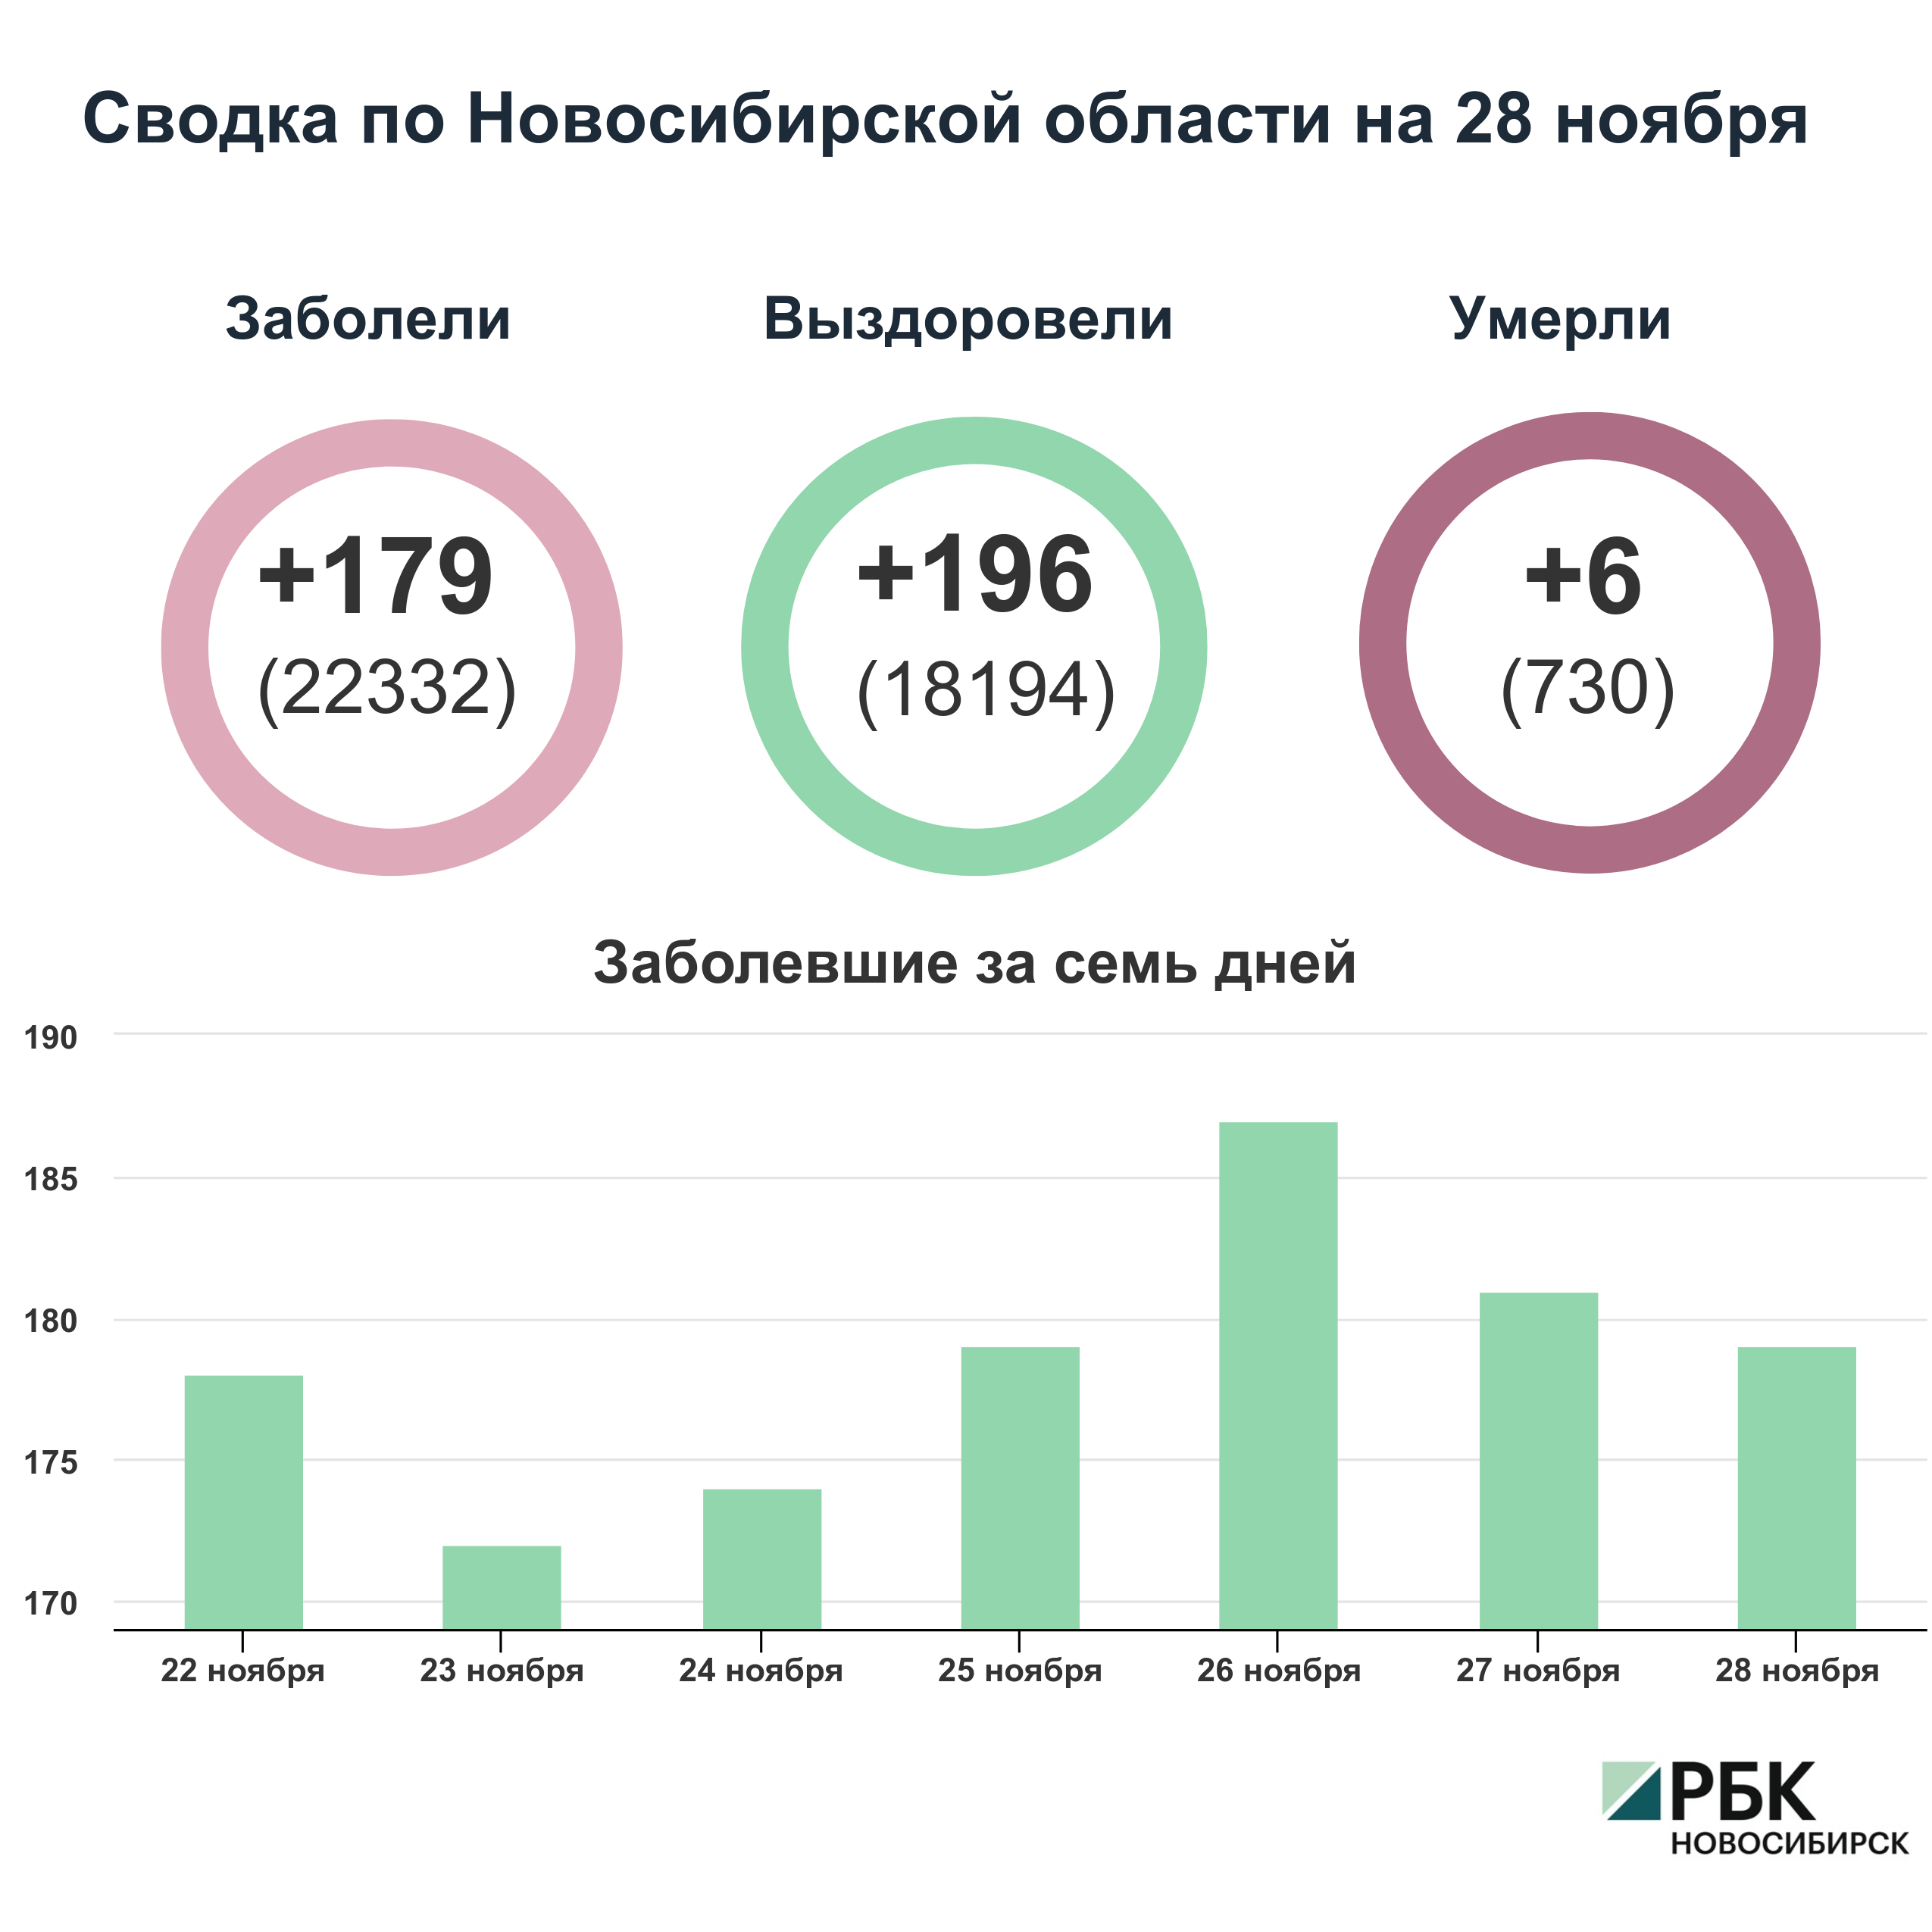 Коронавирус в Новосибирске: сводка на 28 ноября